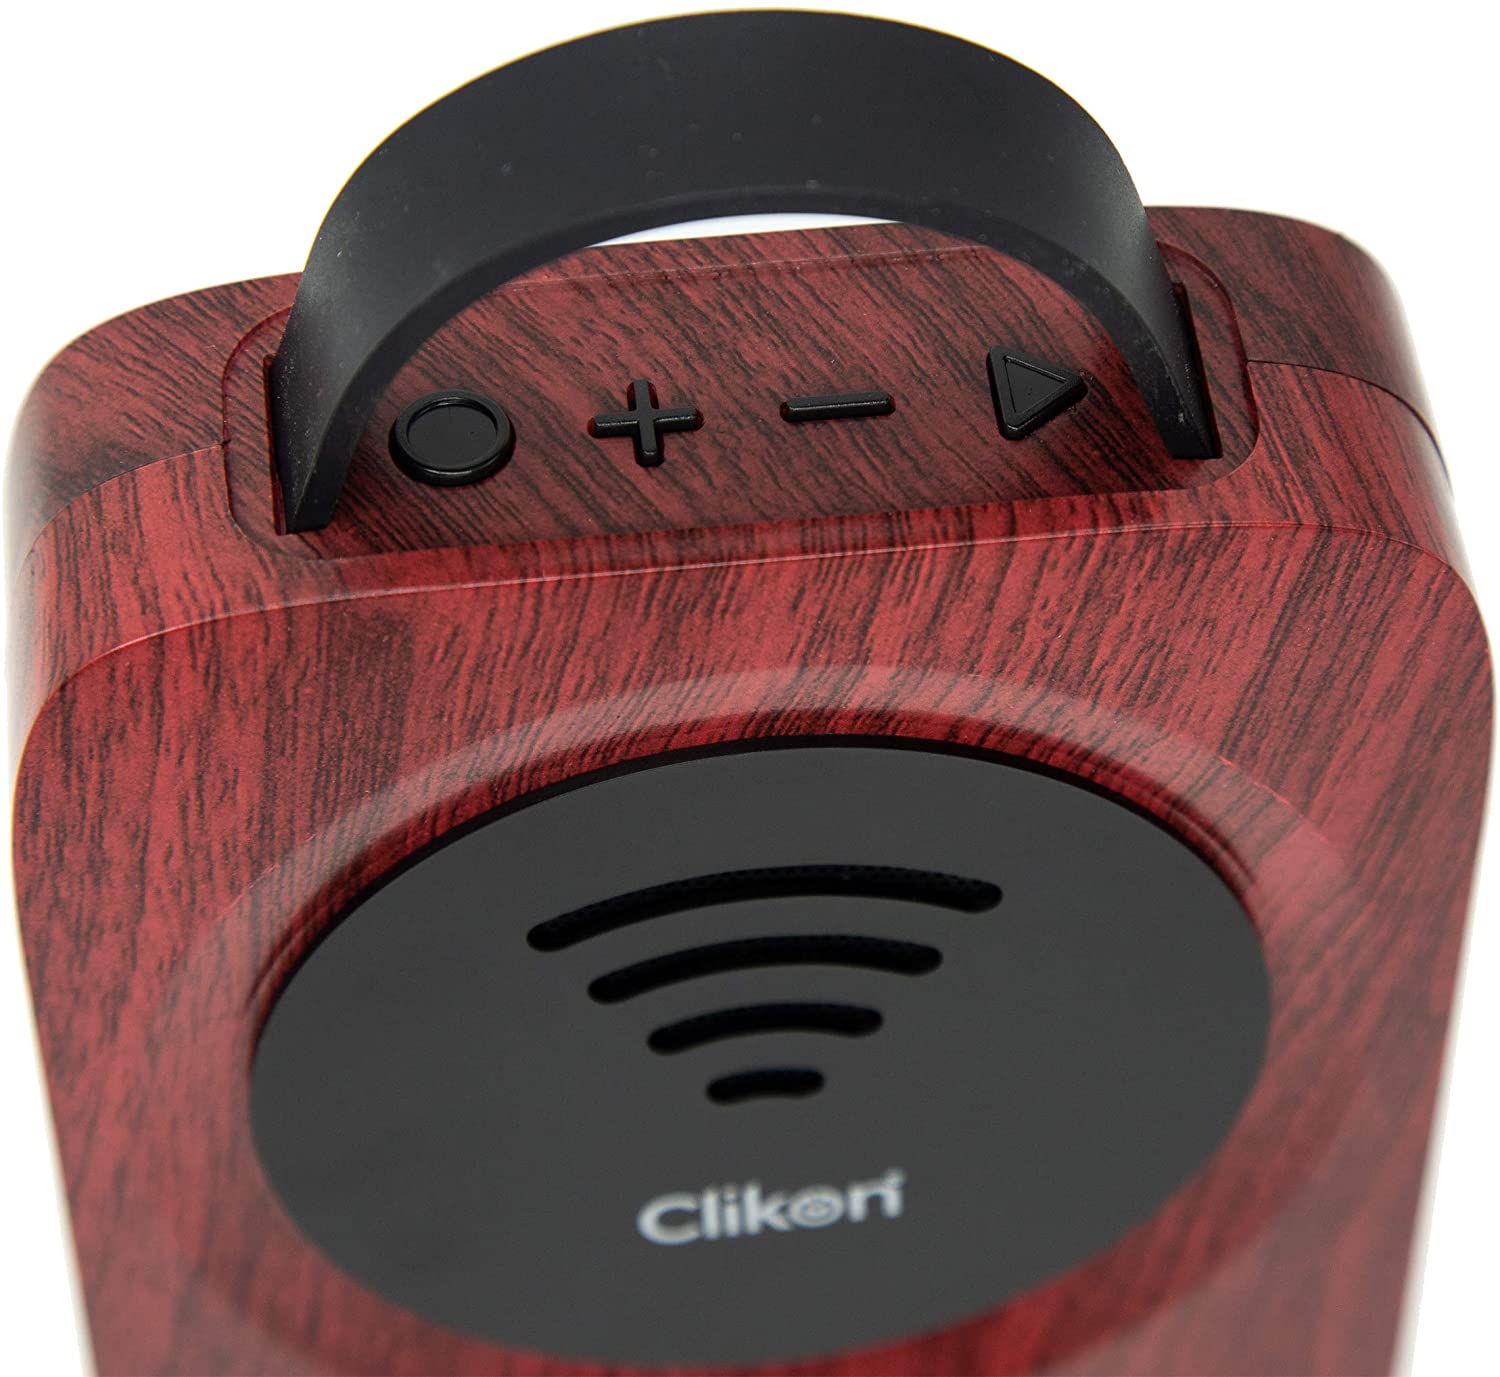 Clikon Wonder Boom Portable Bluetooth Speaker